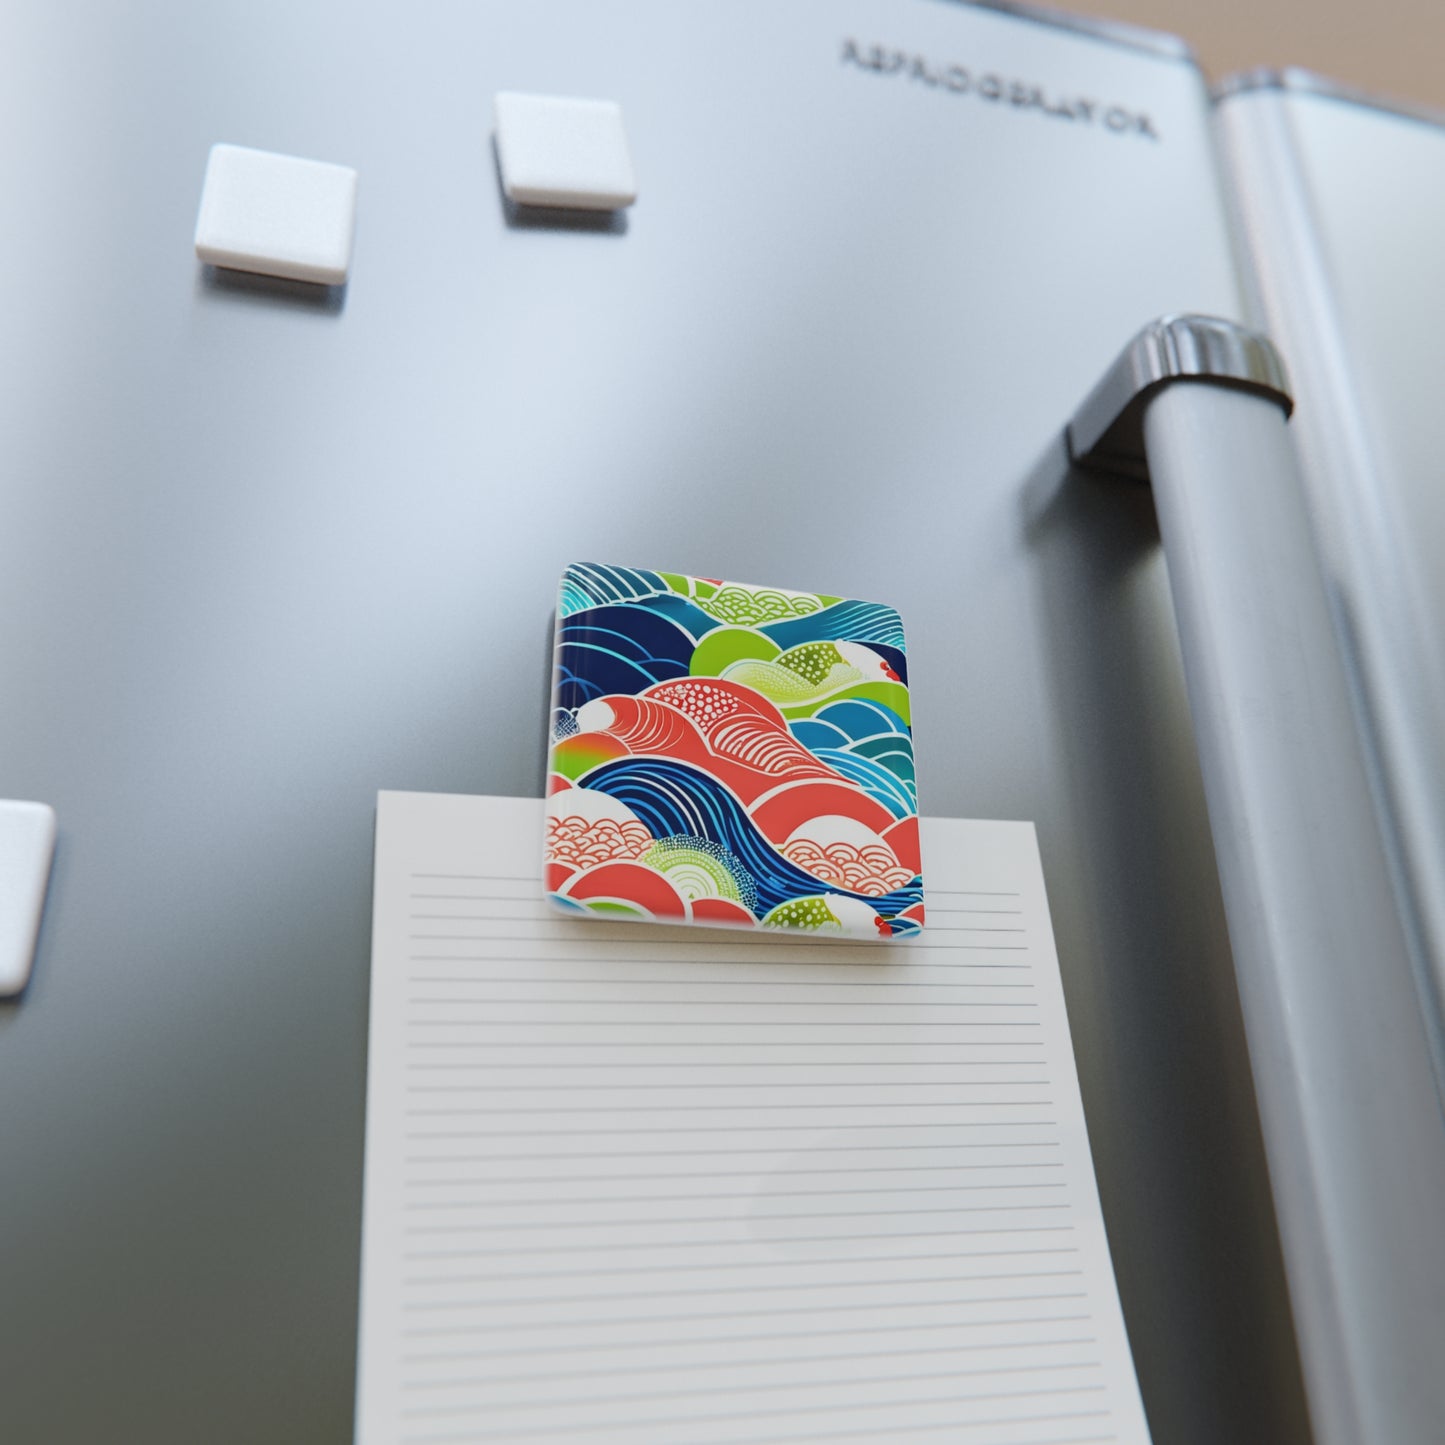 Japanese Origami Decorative Kitchen Refrigerator Porcelain Magnet, Square